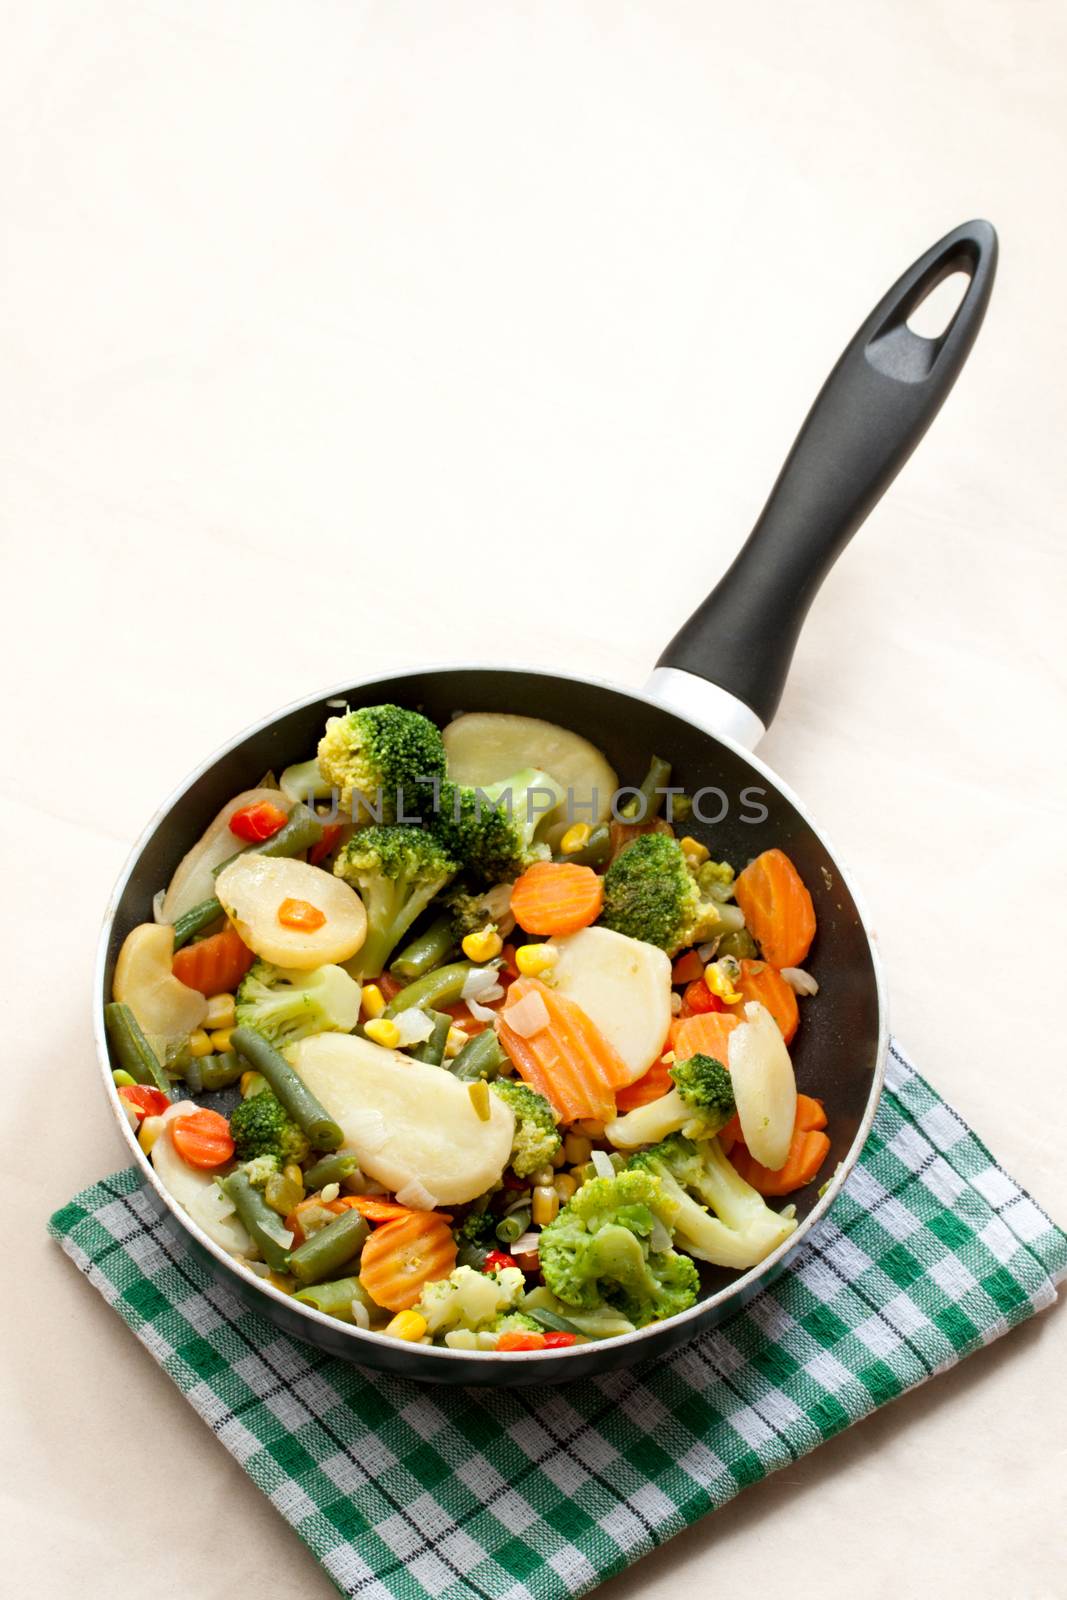 Fried vegetables in a griddle